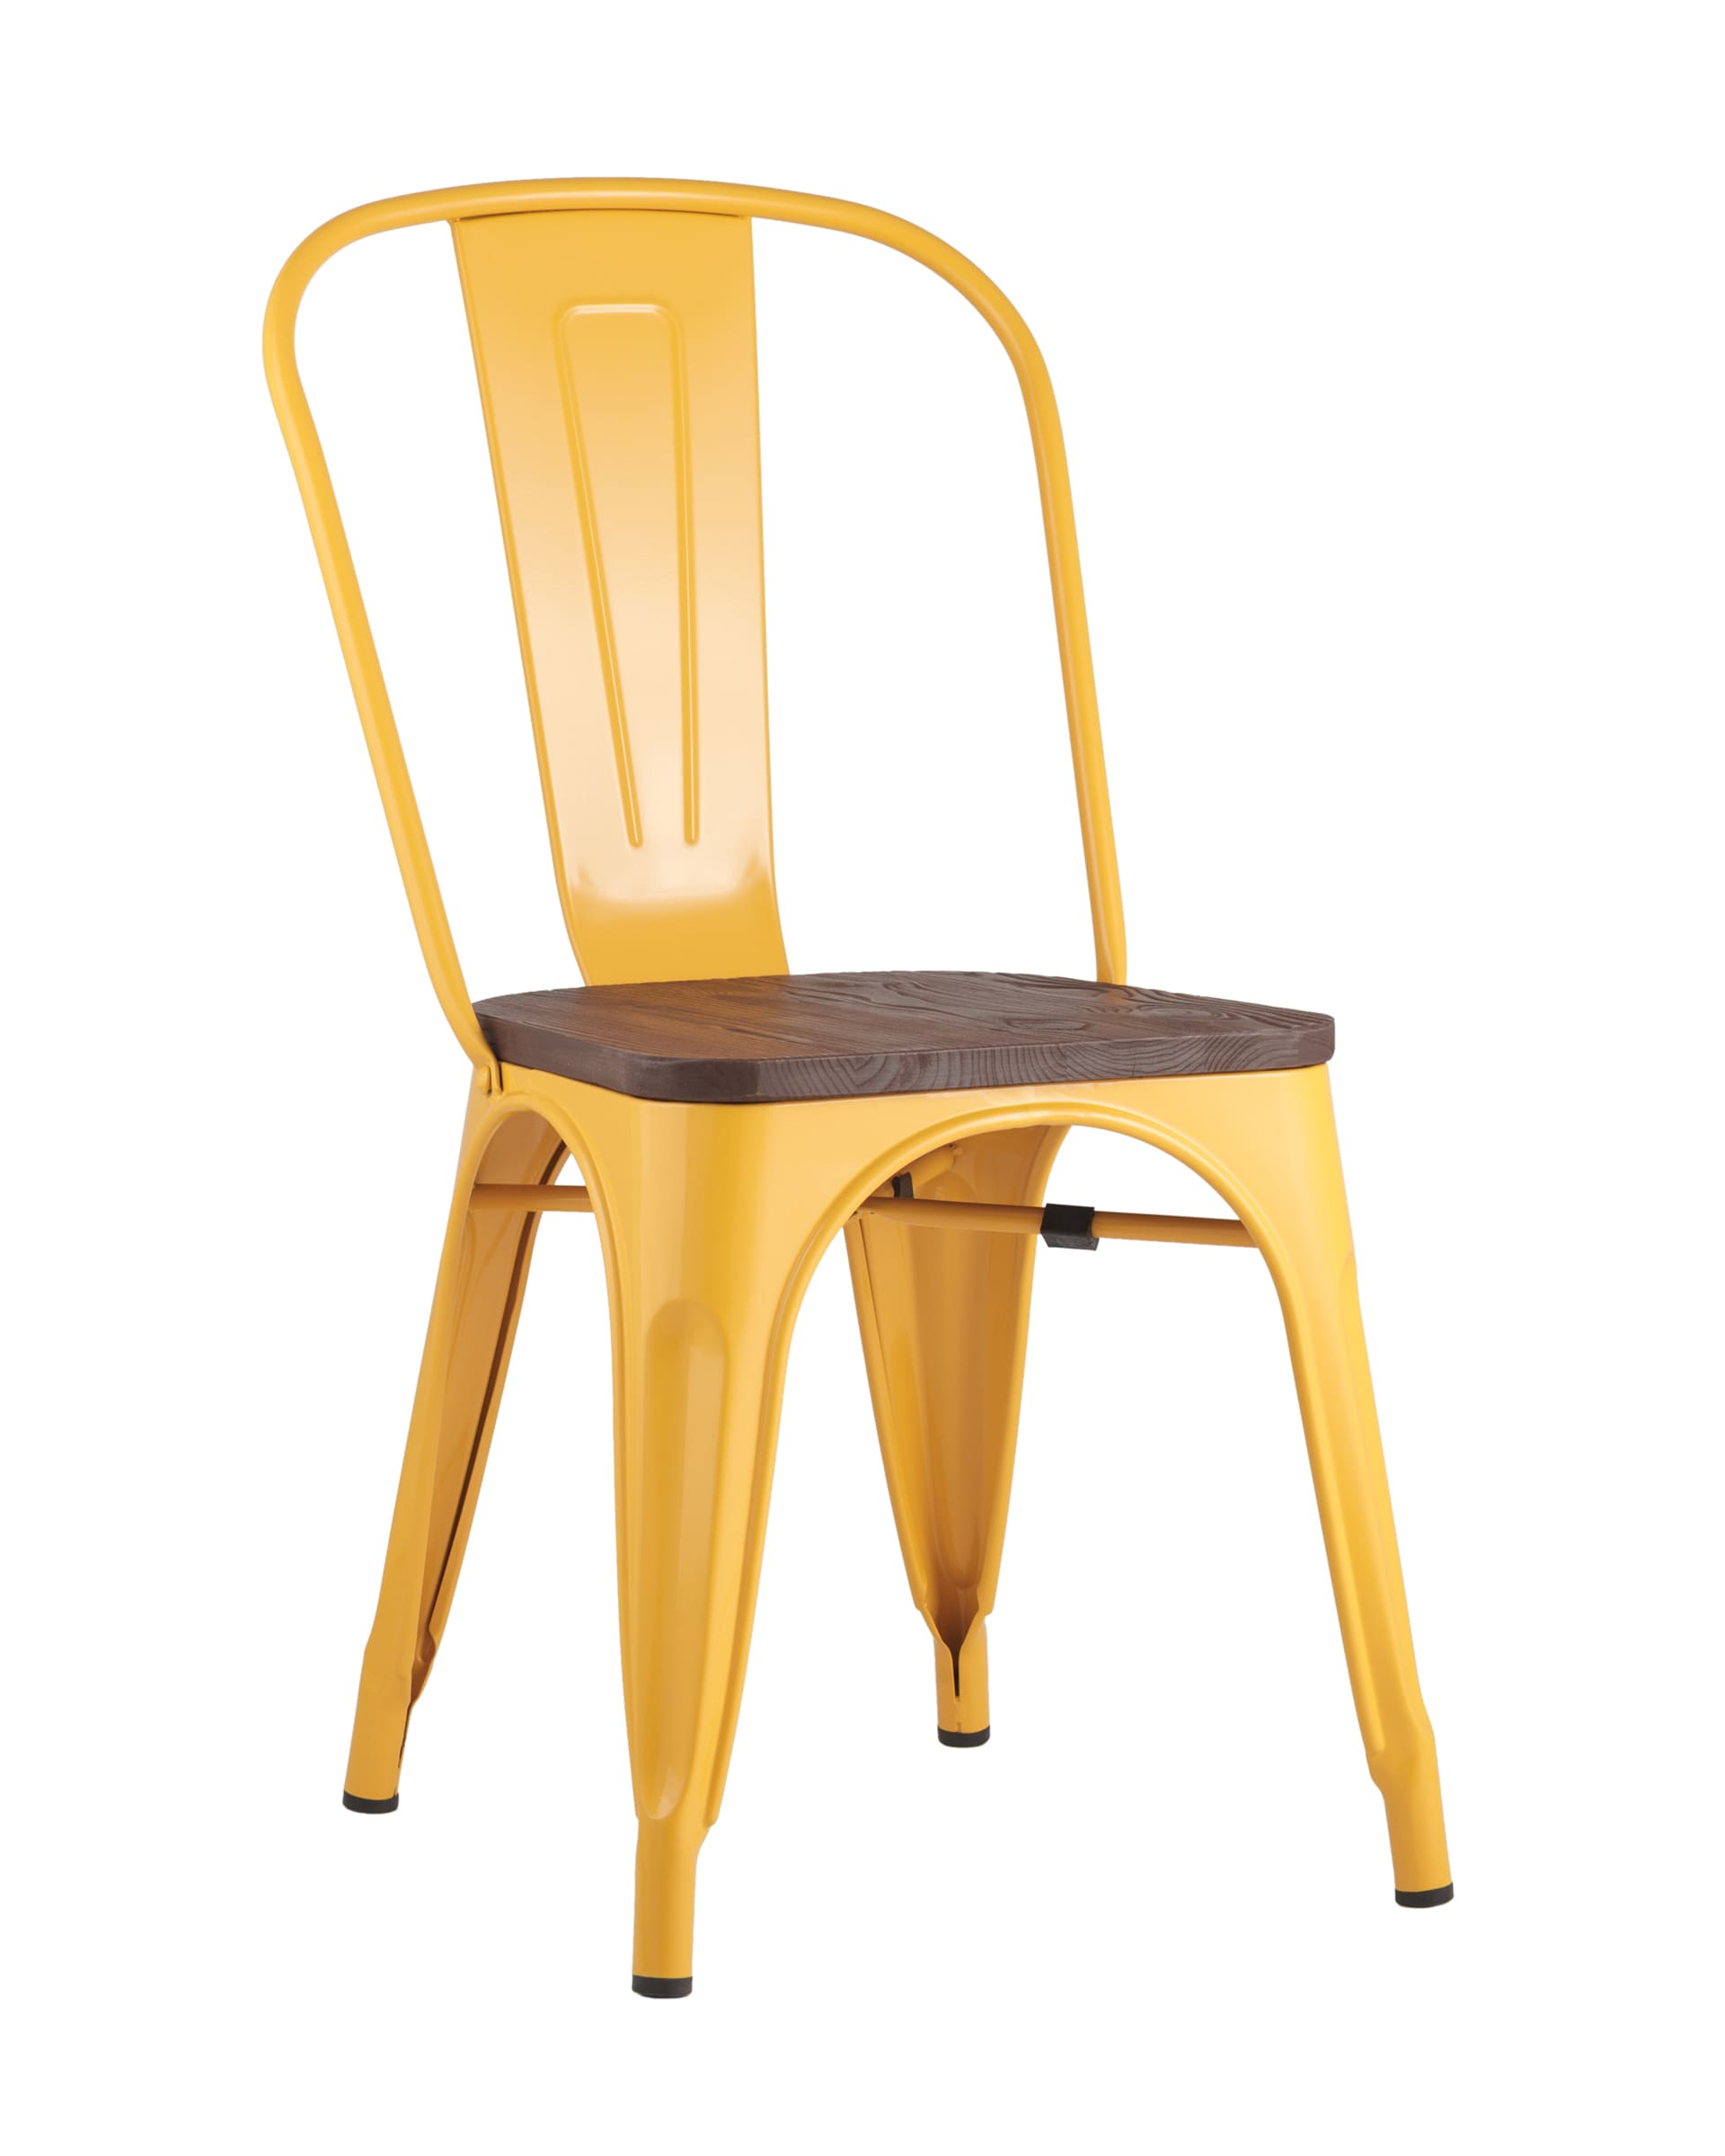 Stool Group Tolix Wood желтый сиденье деревянное